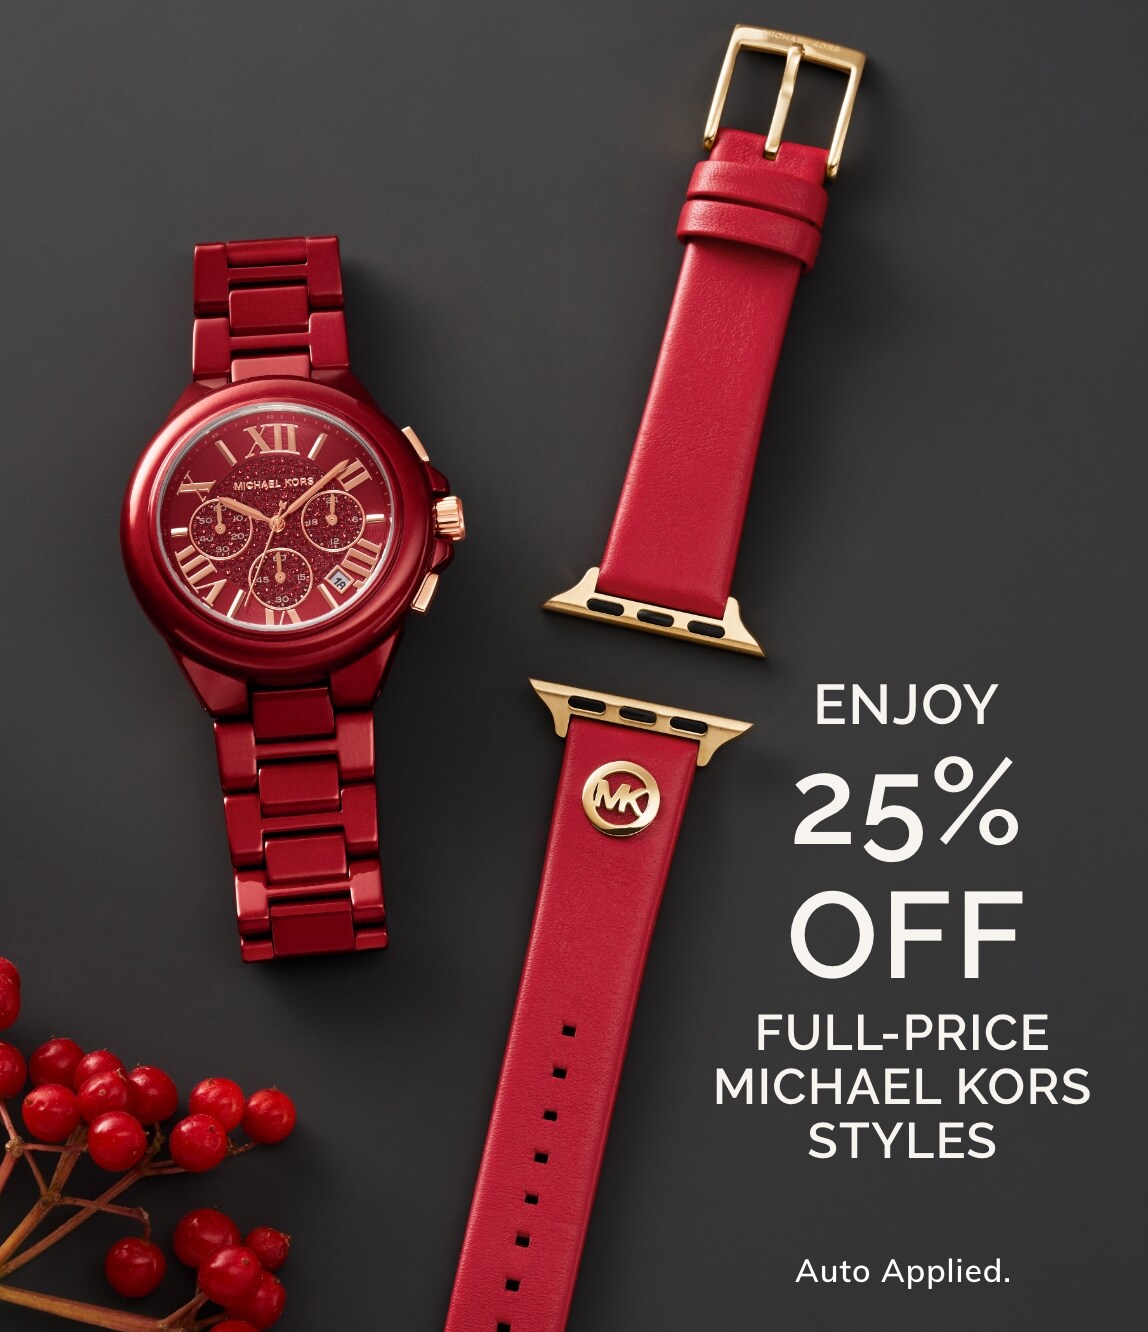 Enjoy 25% Off Full-Price Michael Kors Styles